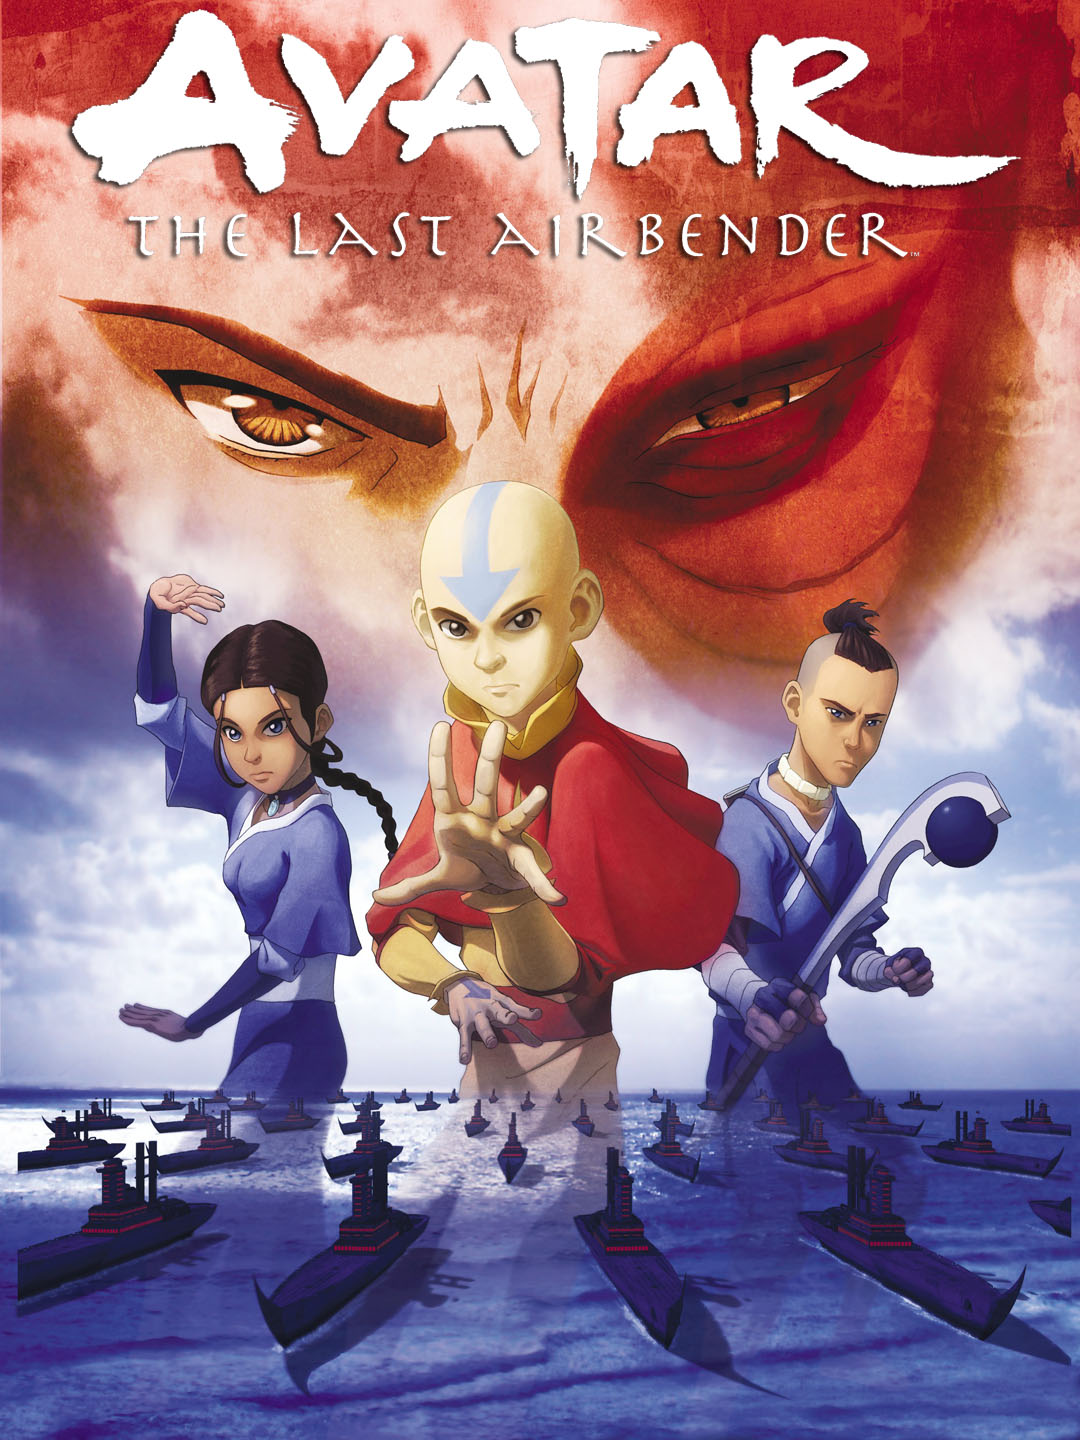 Avatar the Last Airbender 9 Top Avatars According to Reddit